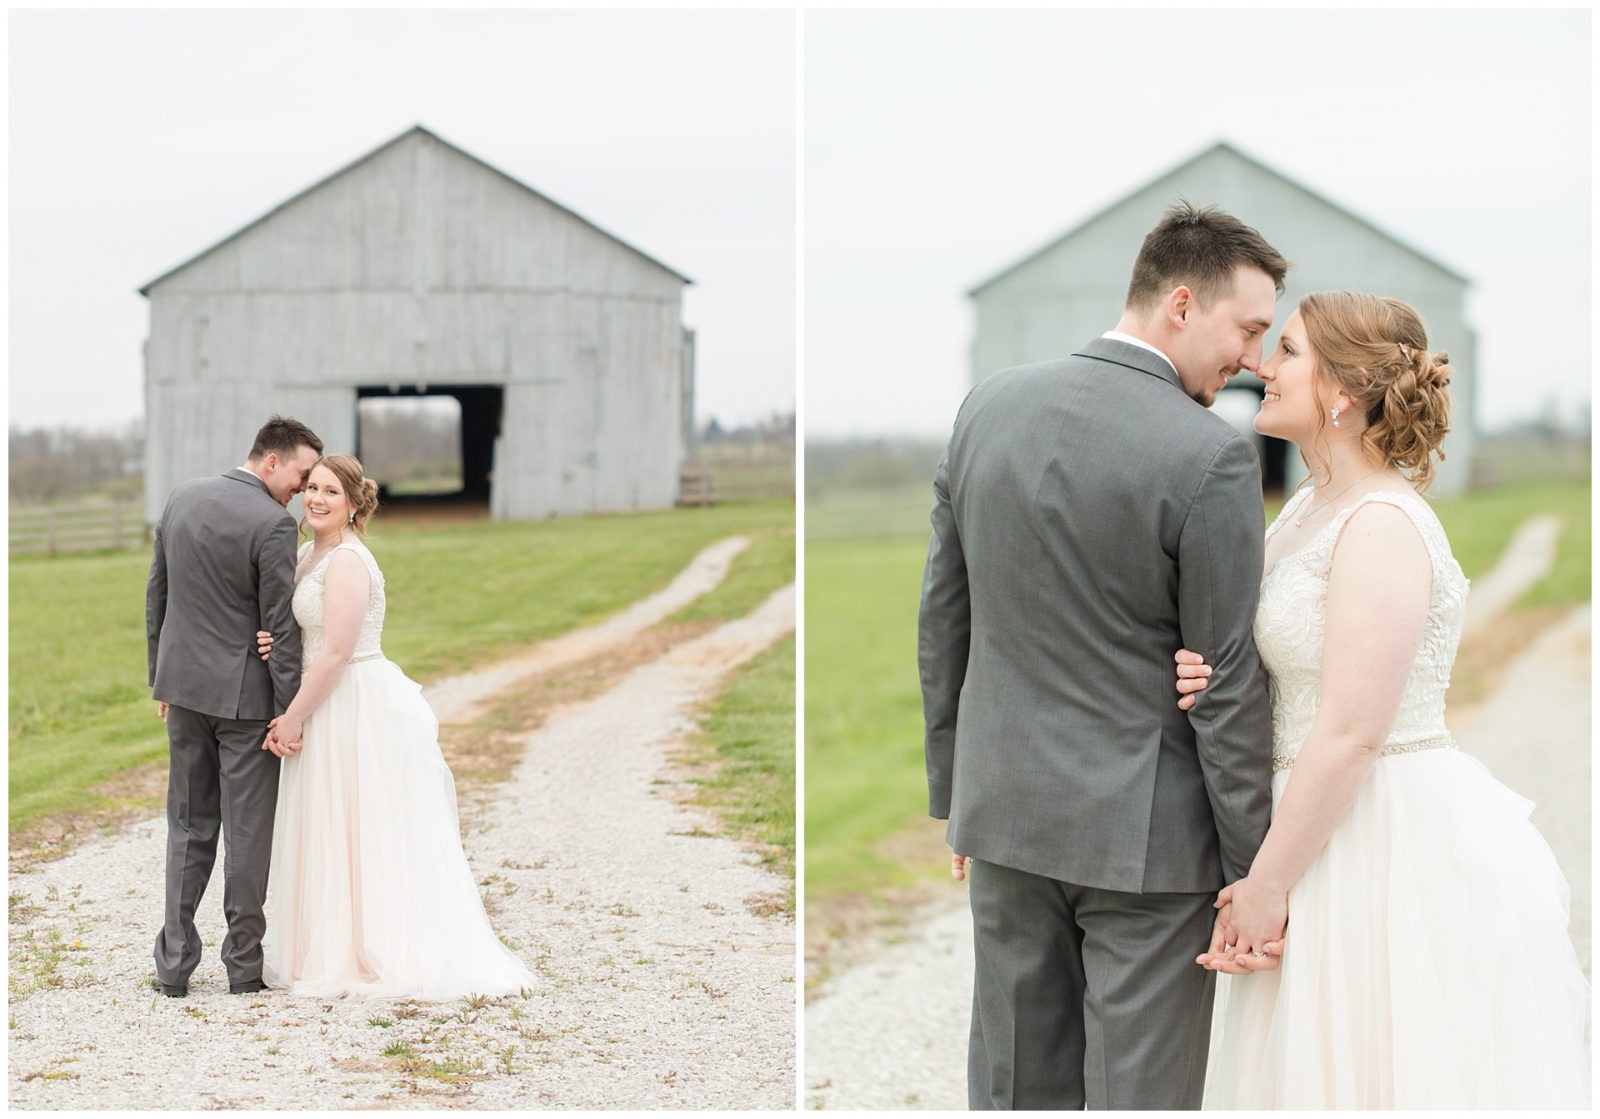 Bride and Groom Photos with at Barn at Ashford Acres Inn in Cynthiana, Kentucky.